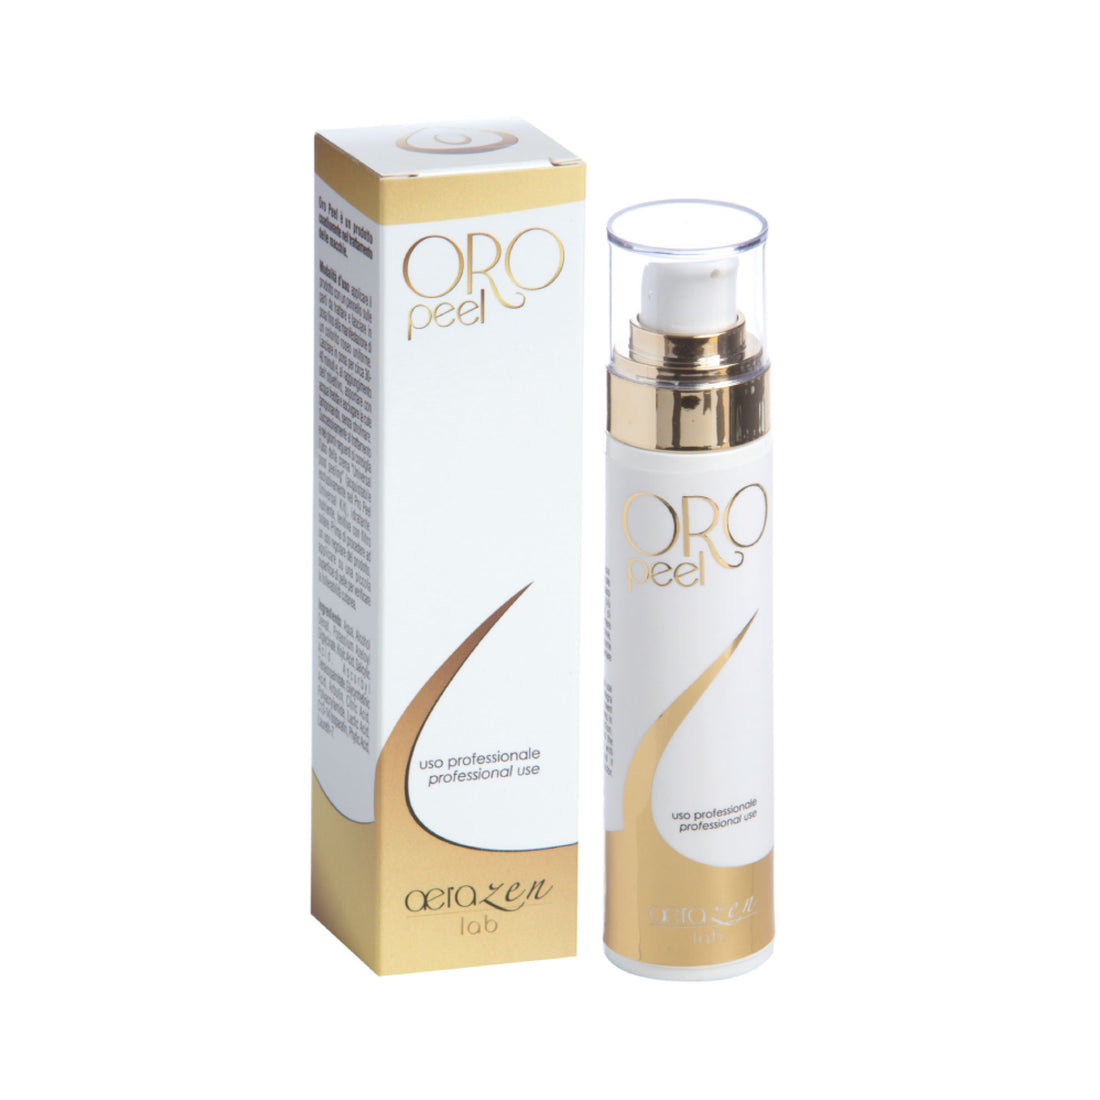 Oro Peel - Adjuvant Product for Spot Treatment - Aerazen Lab.